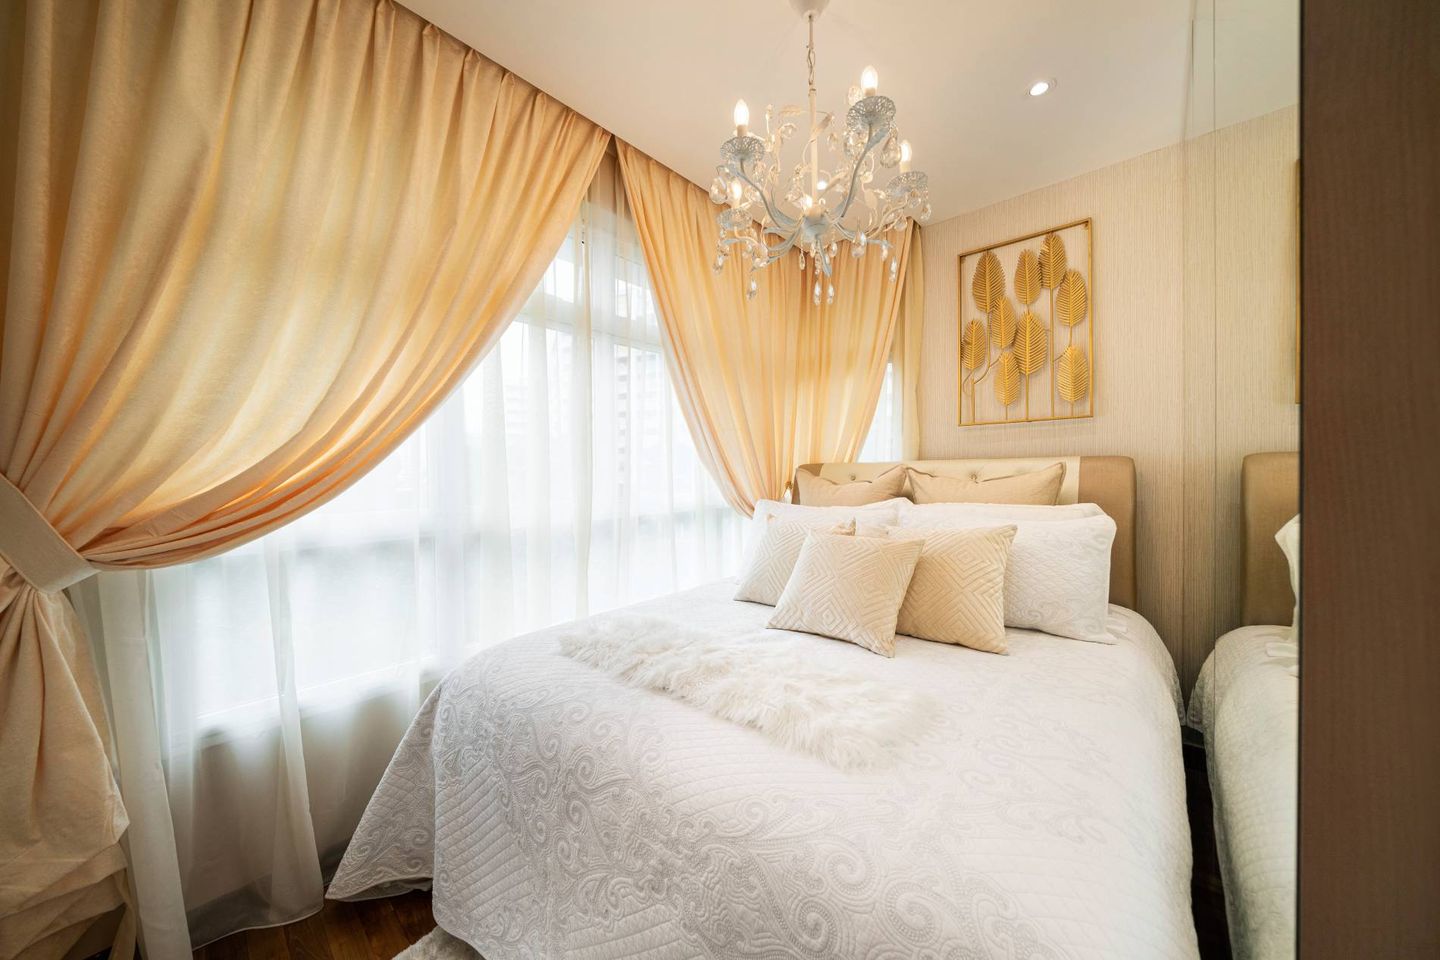 Classic Bedroom Design With Spot Lights - Livspace